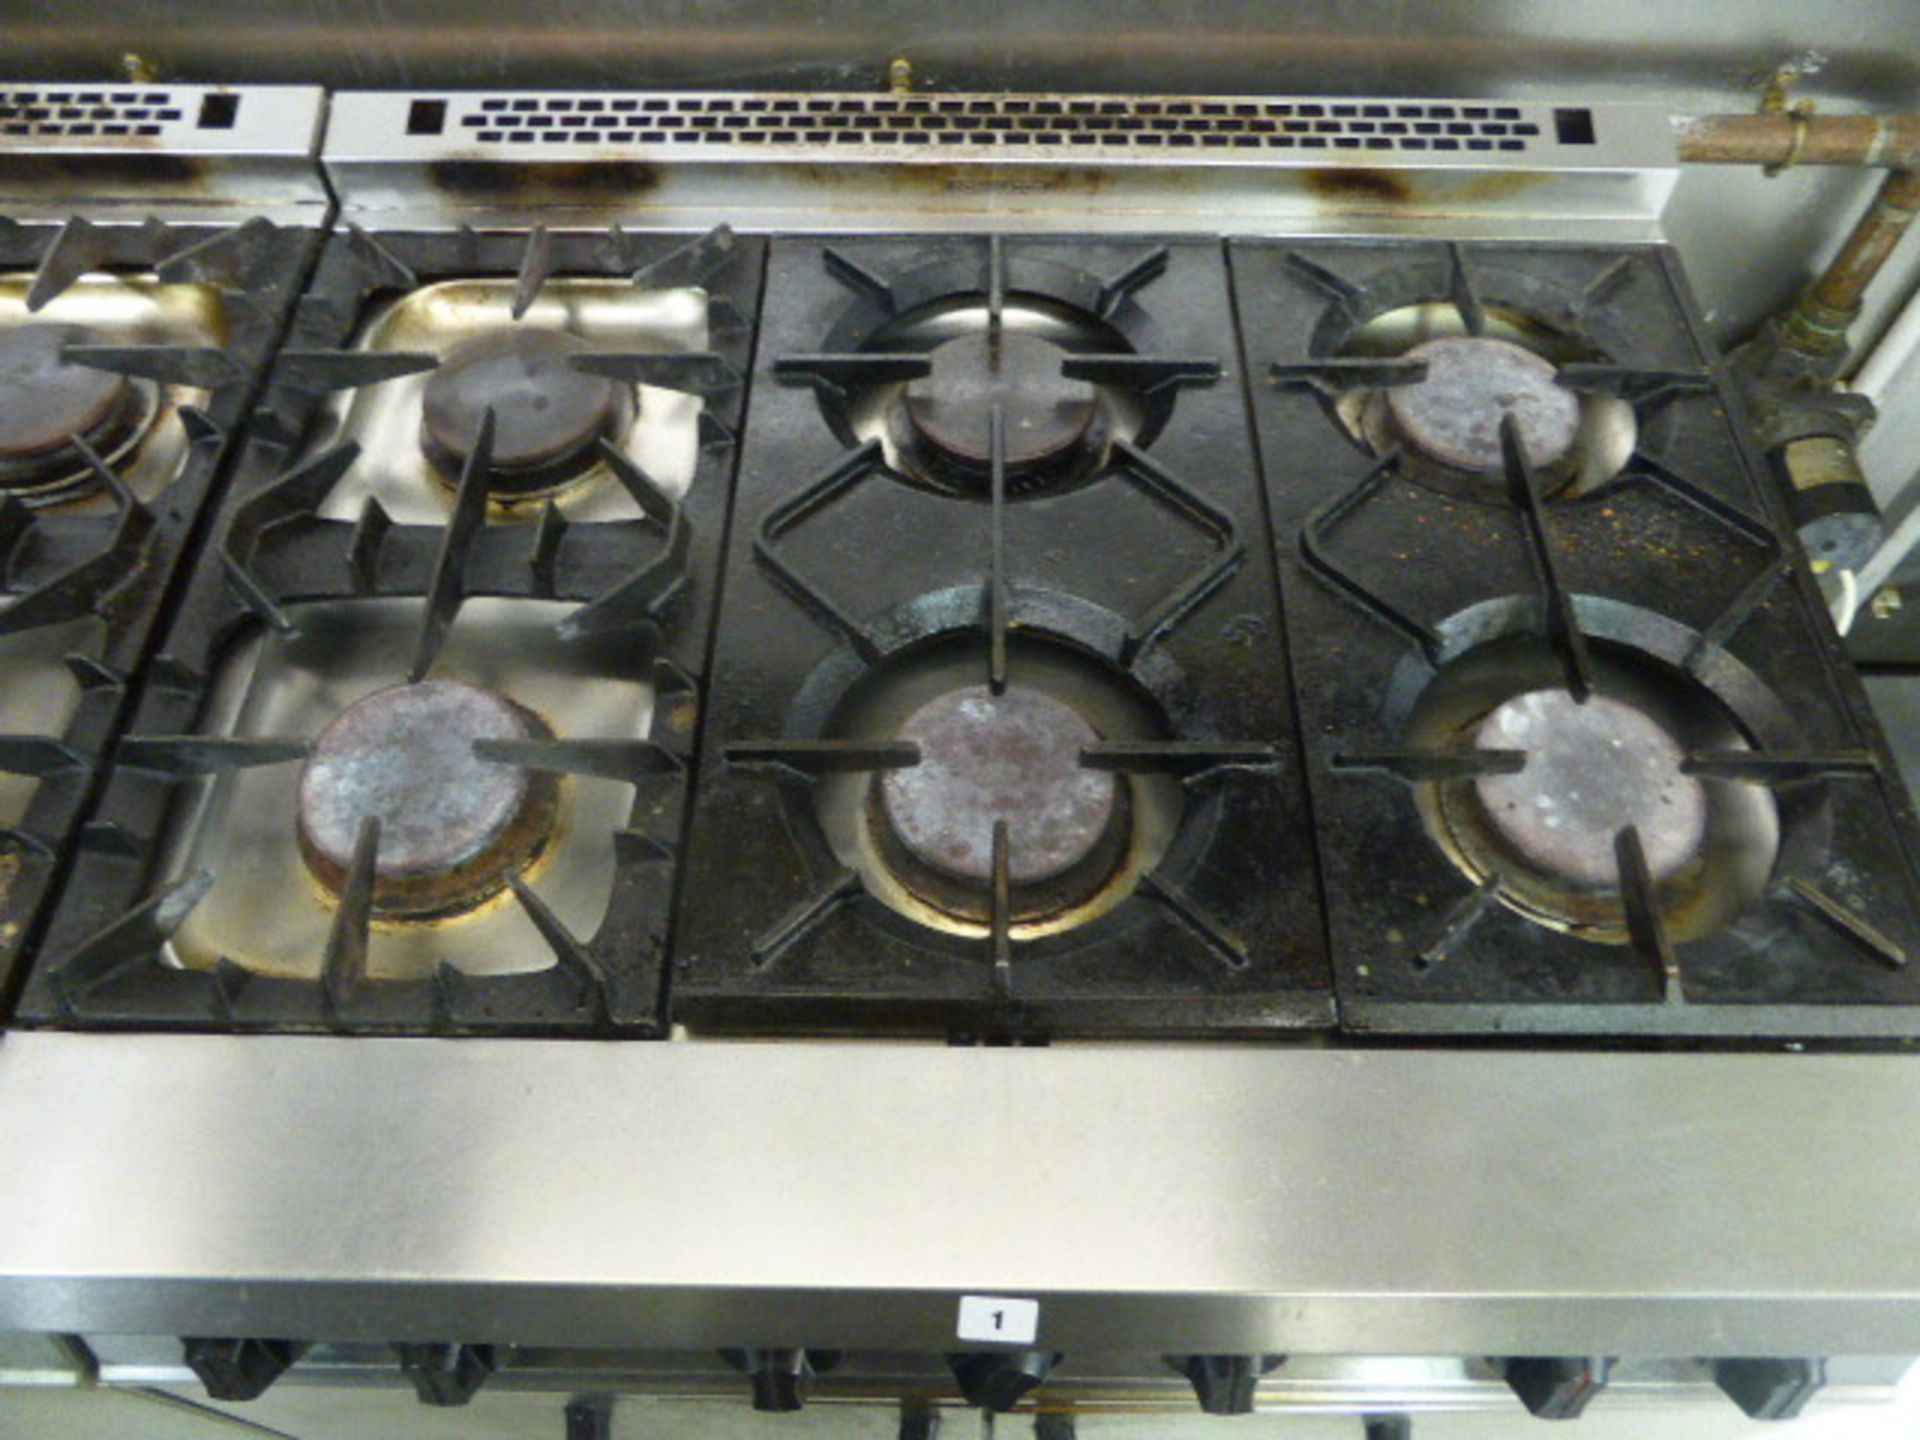 90cm gas Falcon Dominator 6-burner cooker with 2-door oven under - Image 2 of 3